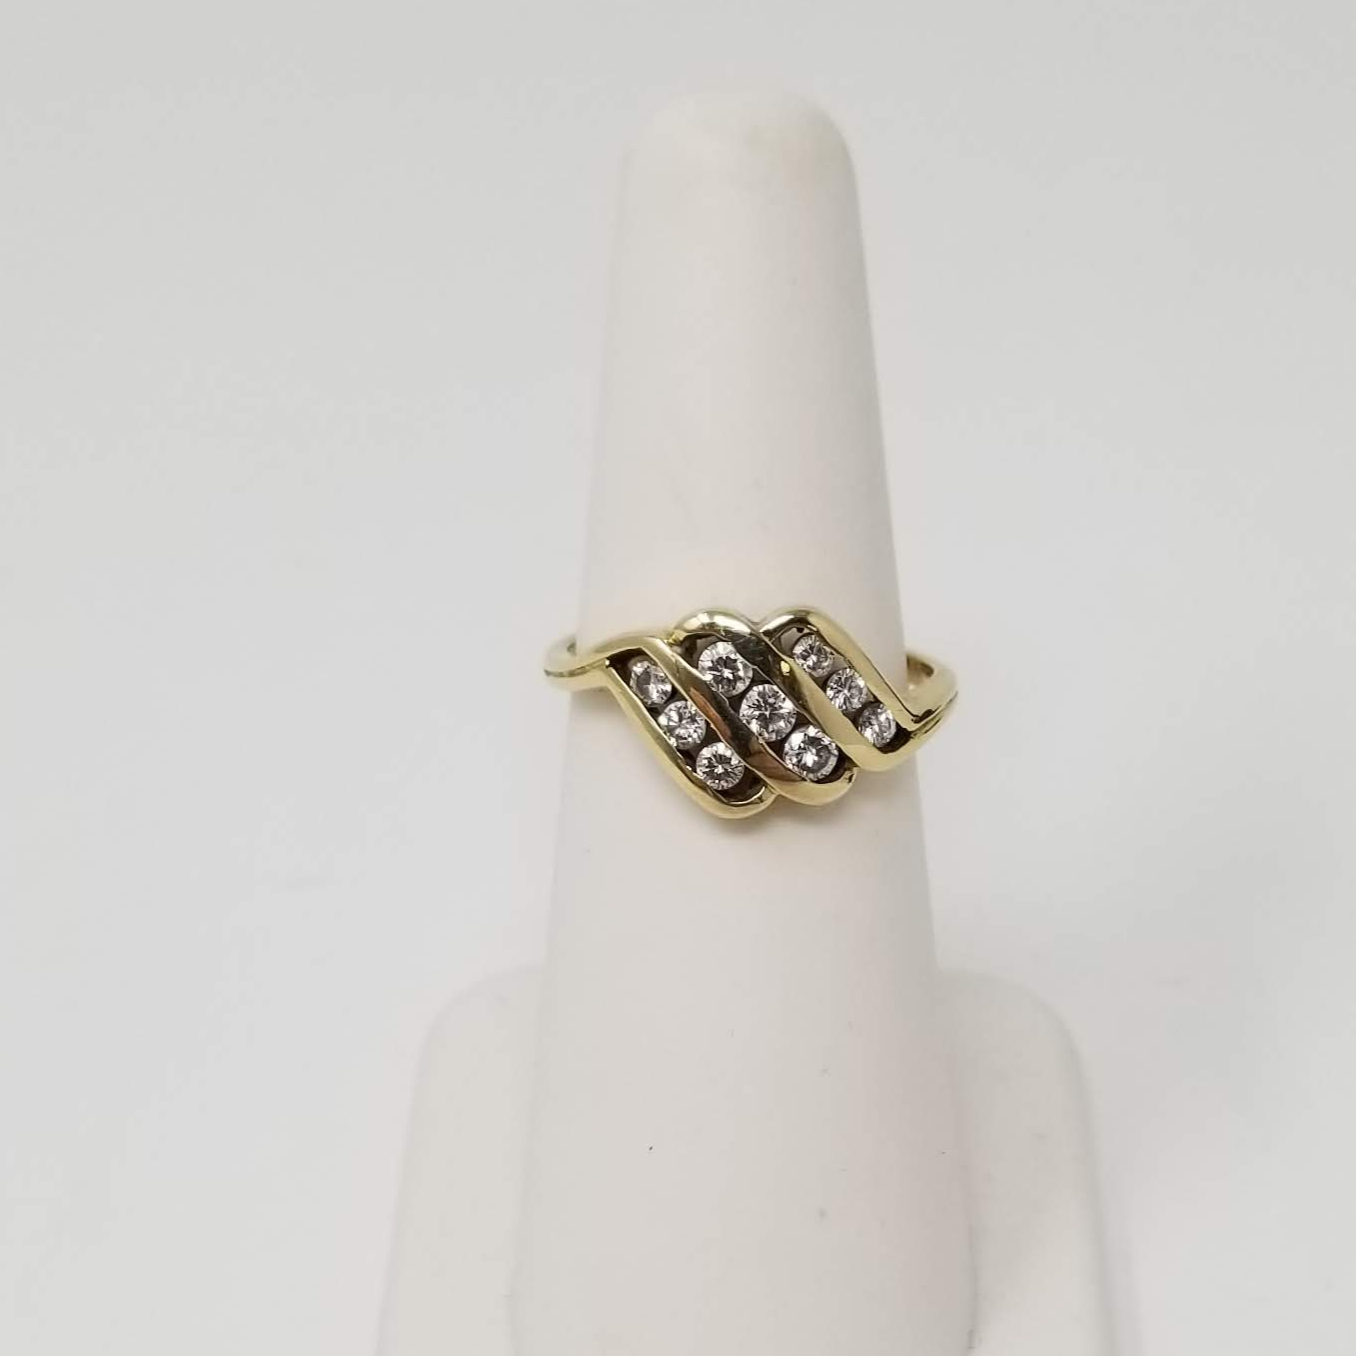 Cocktail Ring - 9 Round Brilliant Diamonds - Size 6.75 - 14K Yellow Gold